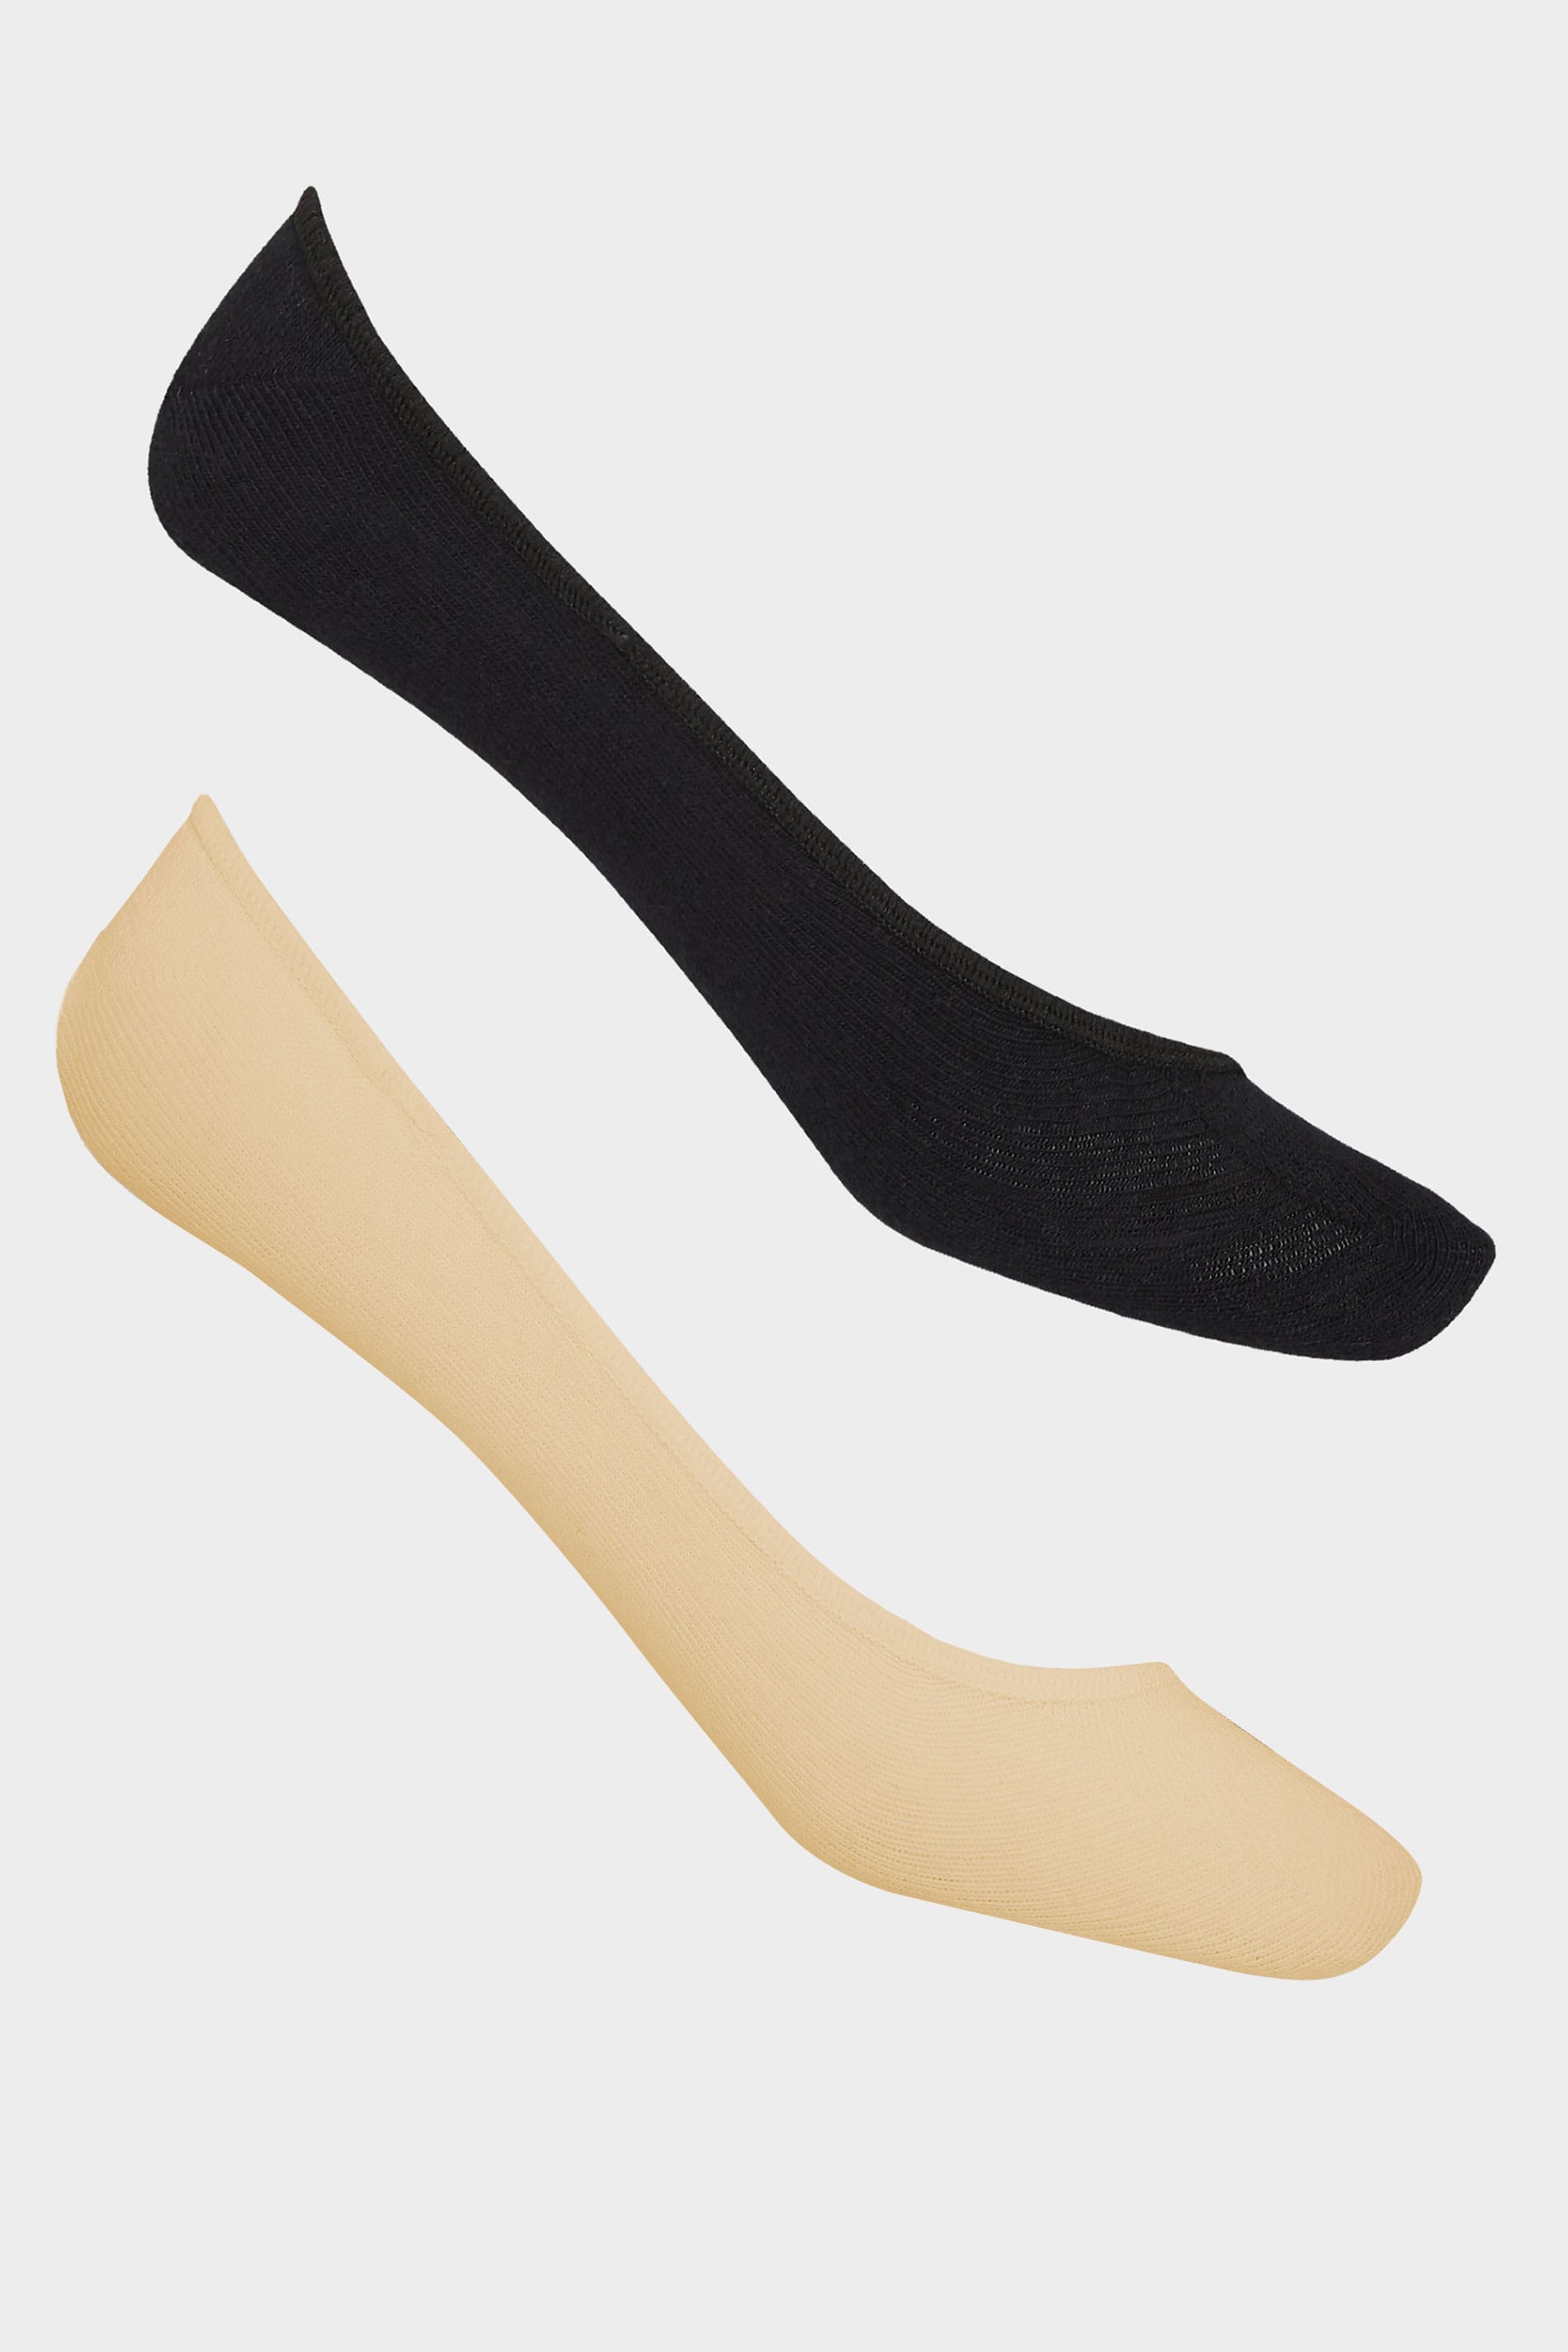 2 PACK Black & Nude Footsie Socks | Yours Clothing 3